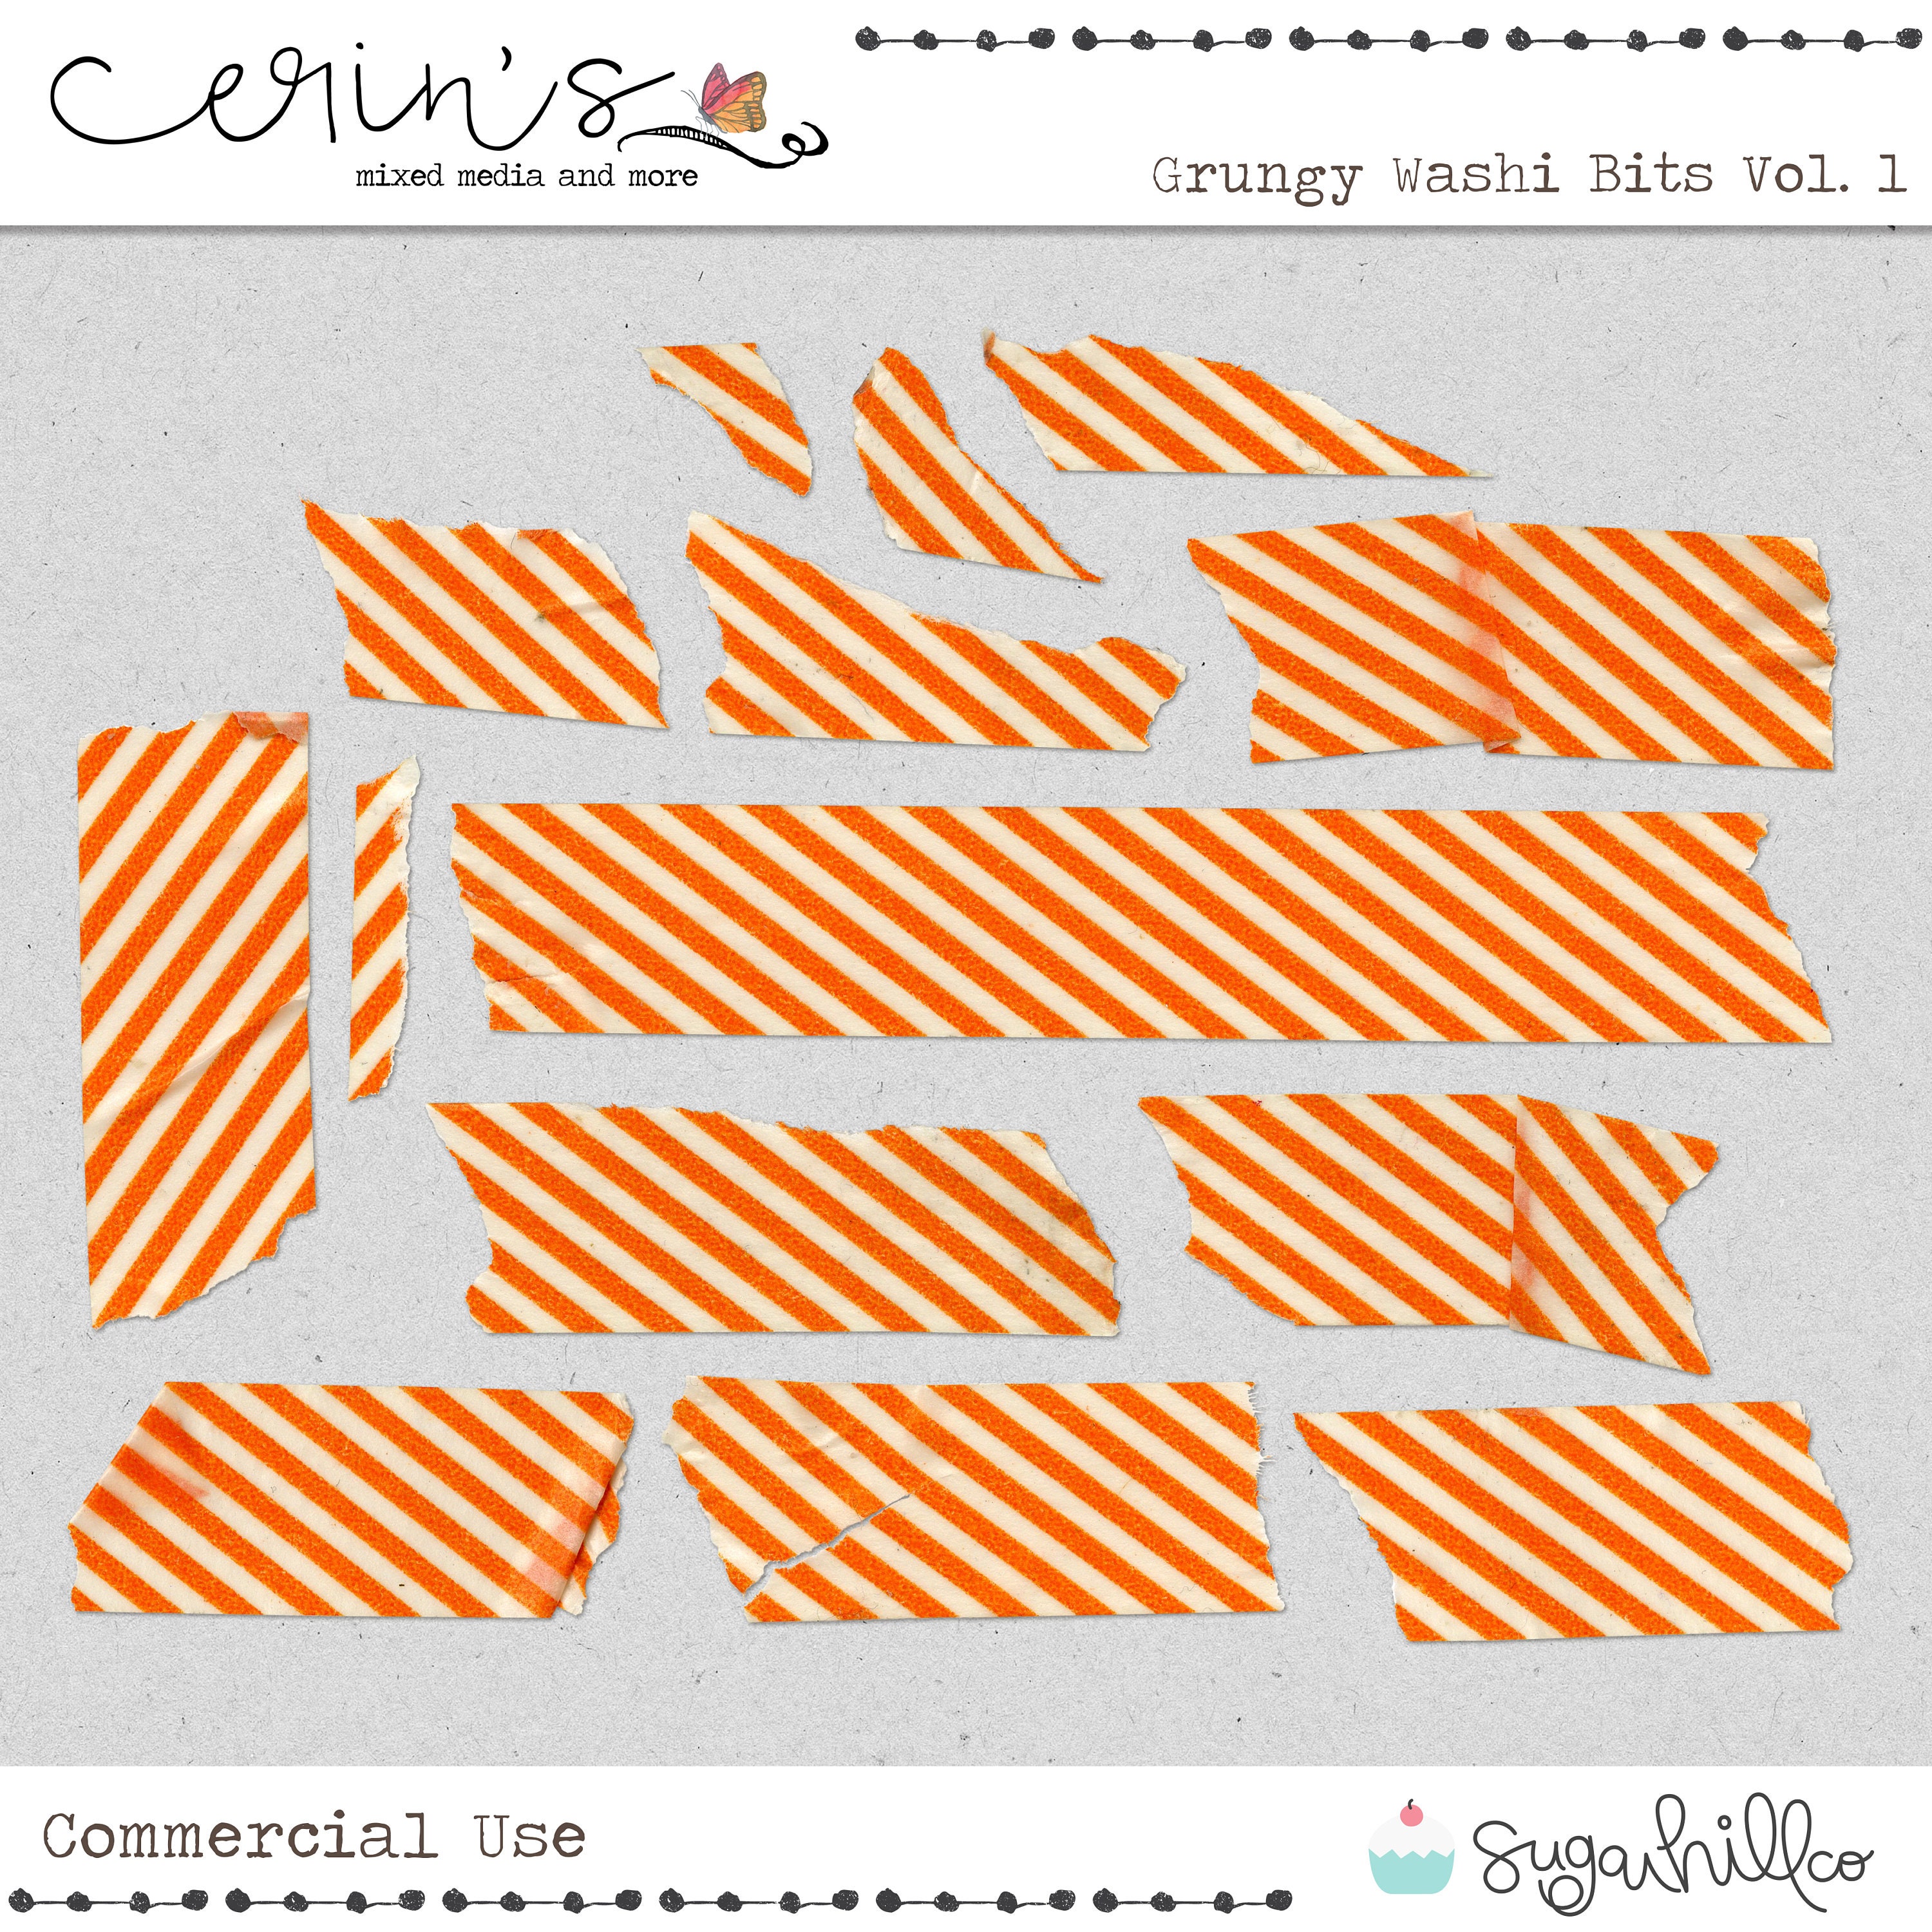 Washi Tape Graphics. WashiTape Clip Art.Scrapbook Element Stock Vector -  Illustration of element, diagonal: 77336678